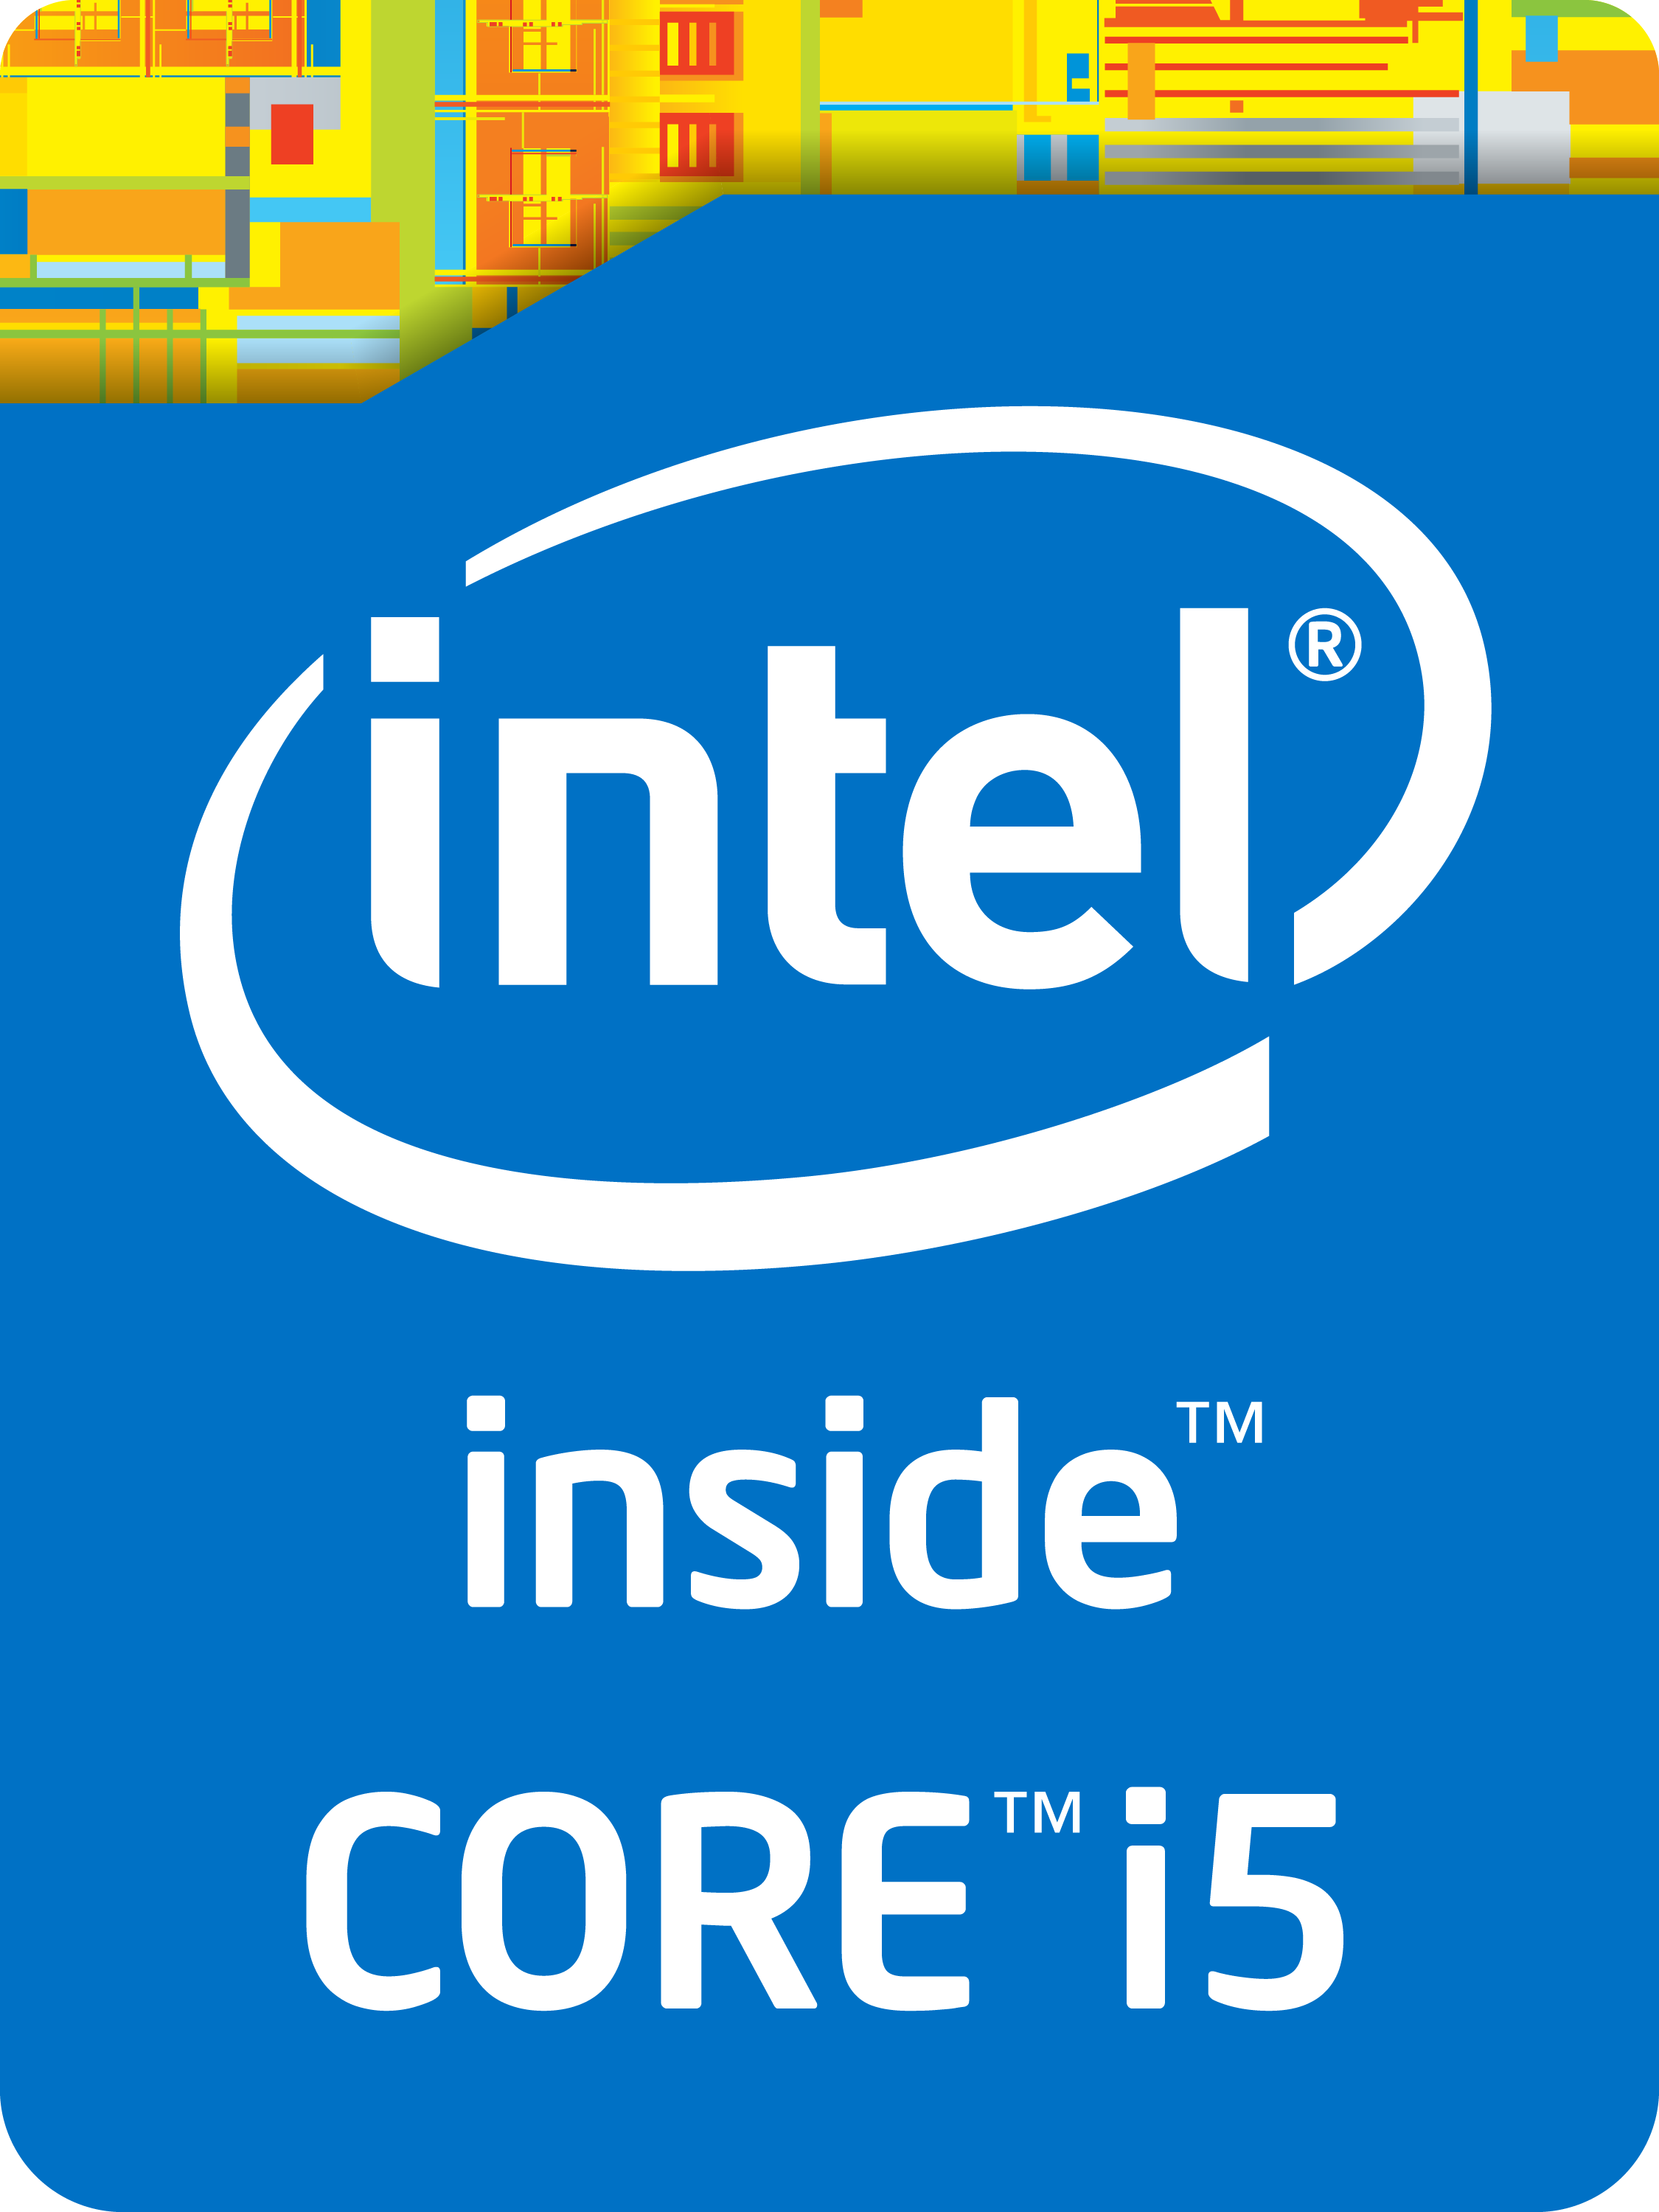 Intel Core i5 4210M Notebook Processor - NotebookCheck.net Tech